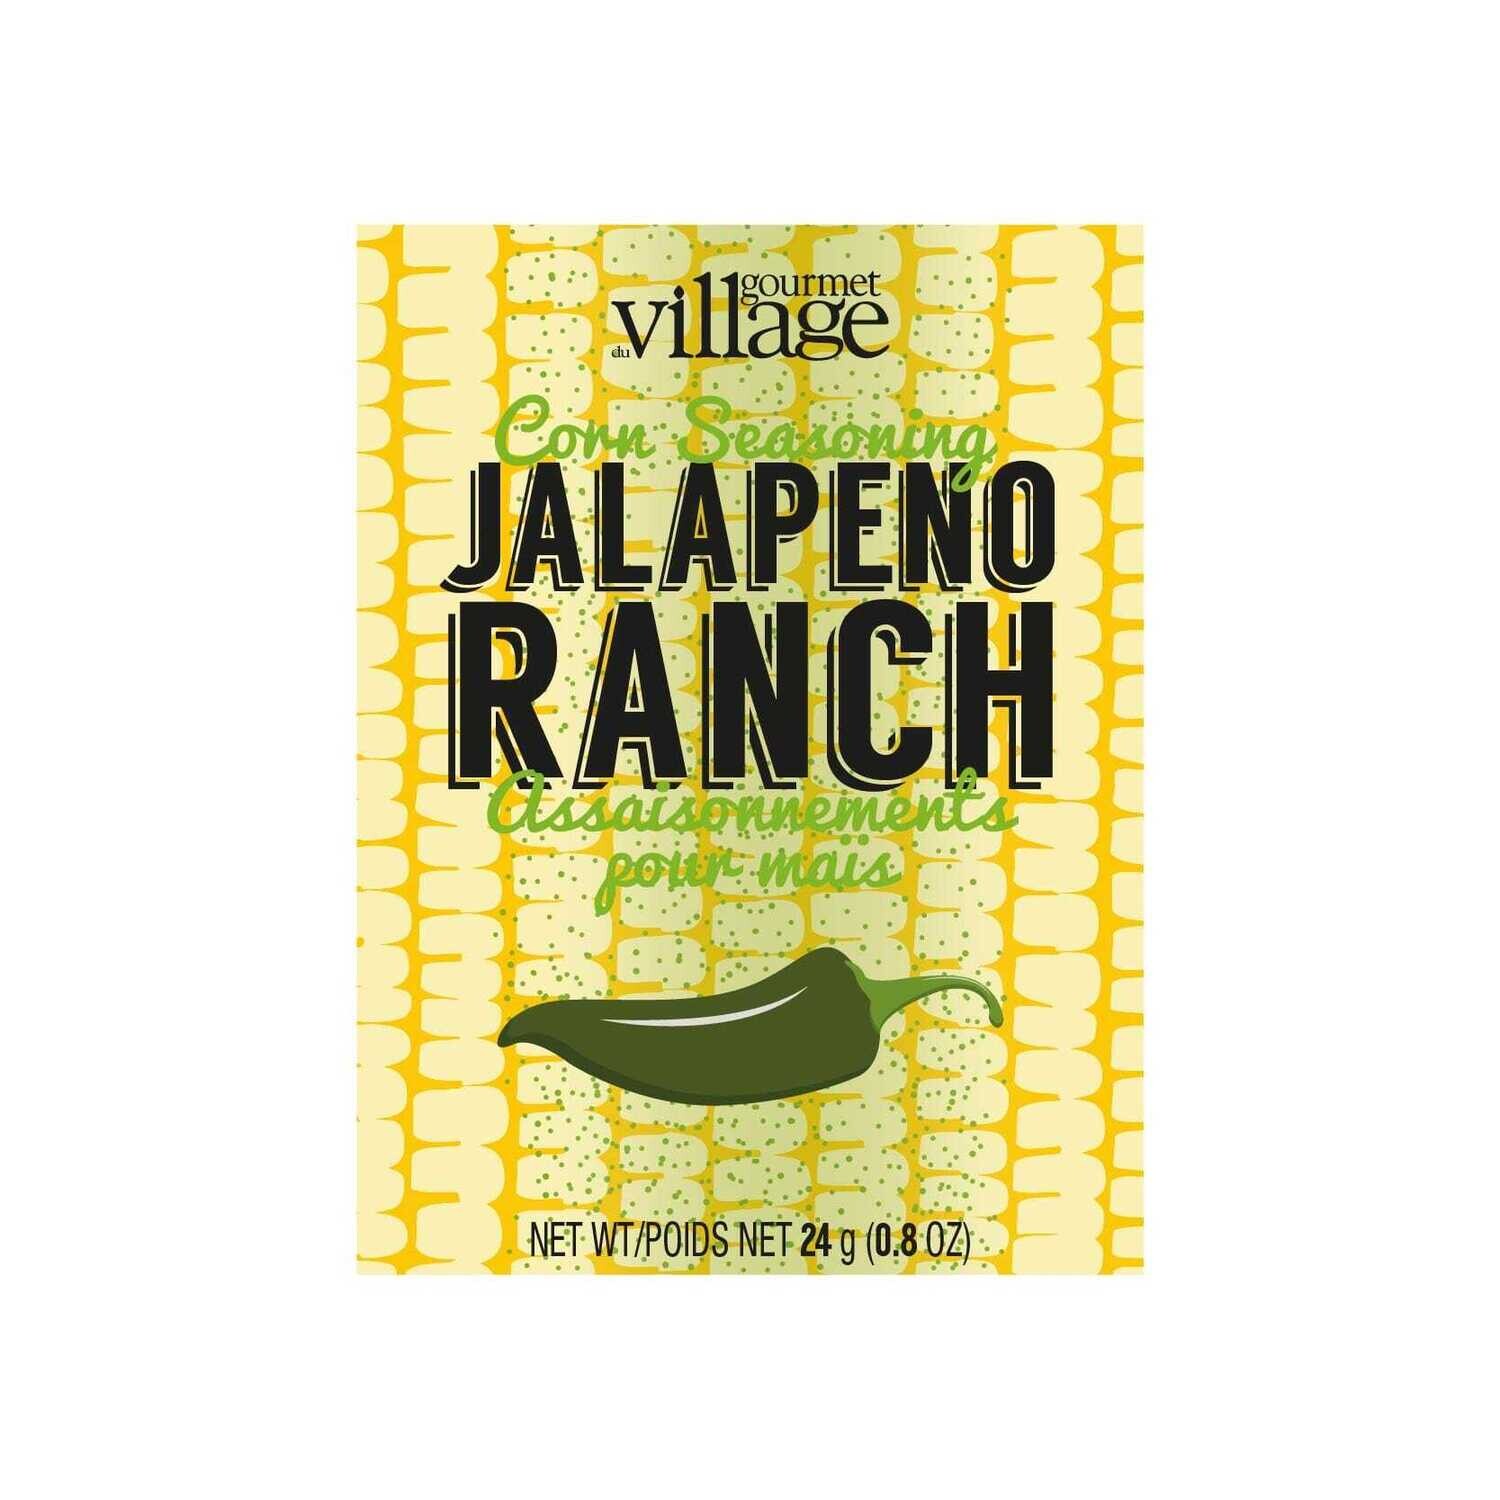 Corn Seasoning Jalapeno Ranch